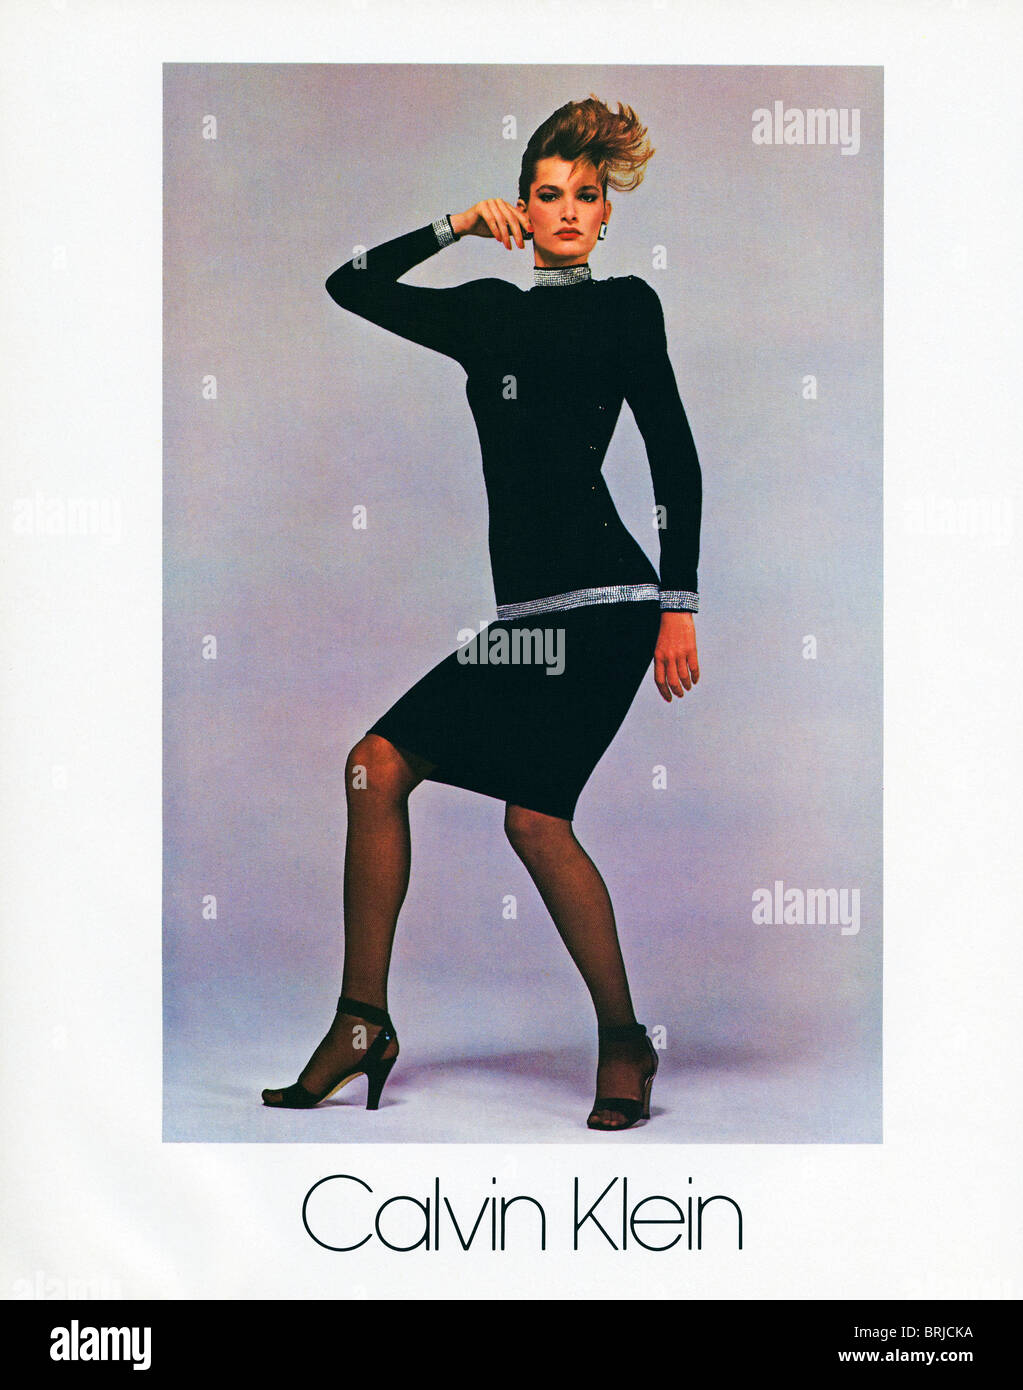 calvin klein advertisement - Classic advert for fashion designer Calvin Klein in American fashion magazine circa 1983 Stock Photo